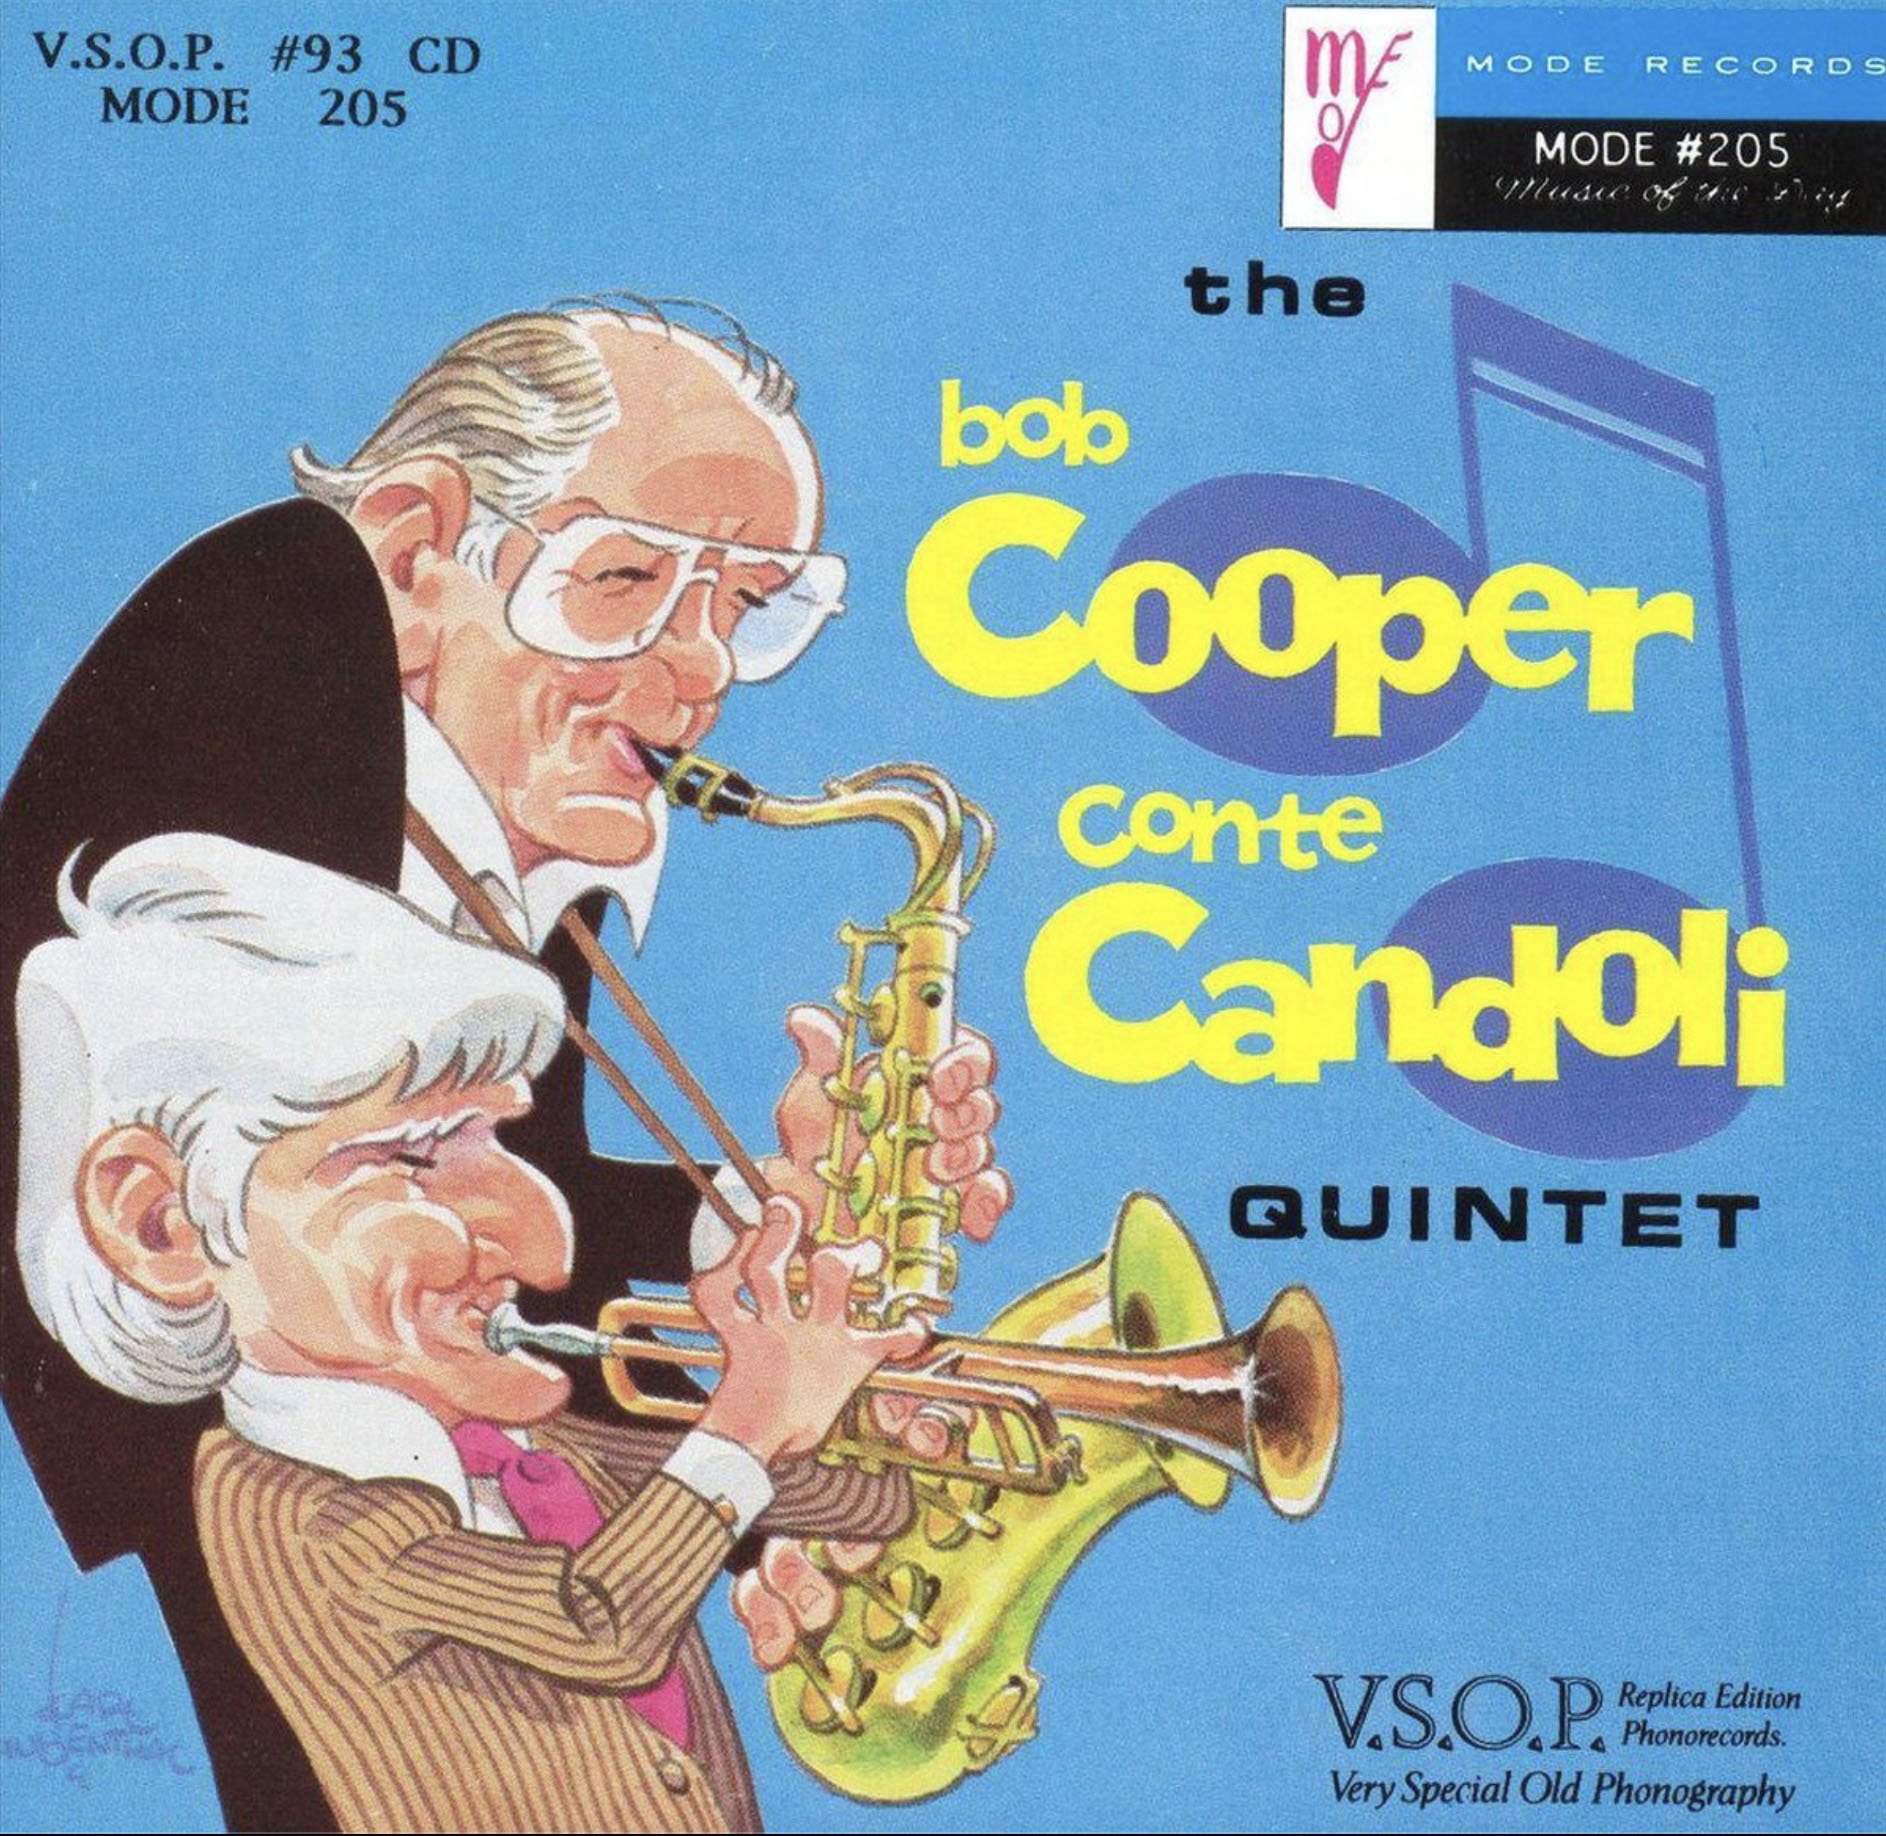 Bob Cooper - Candoli Quartet